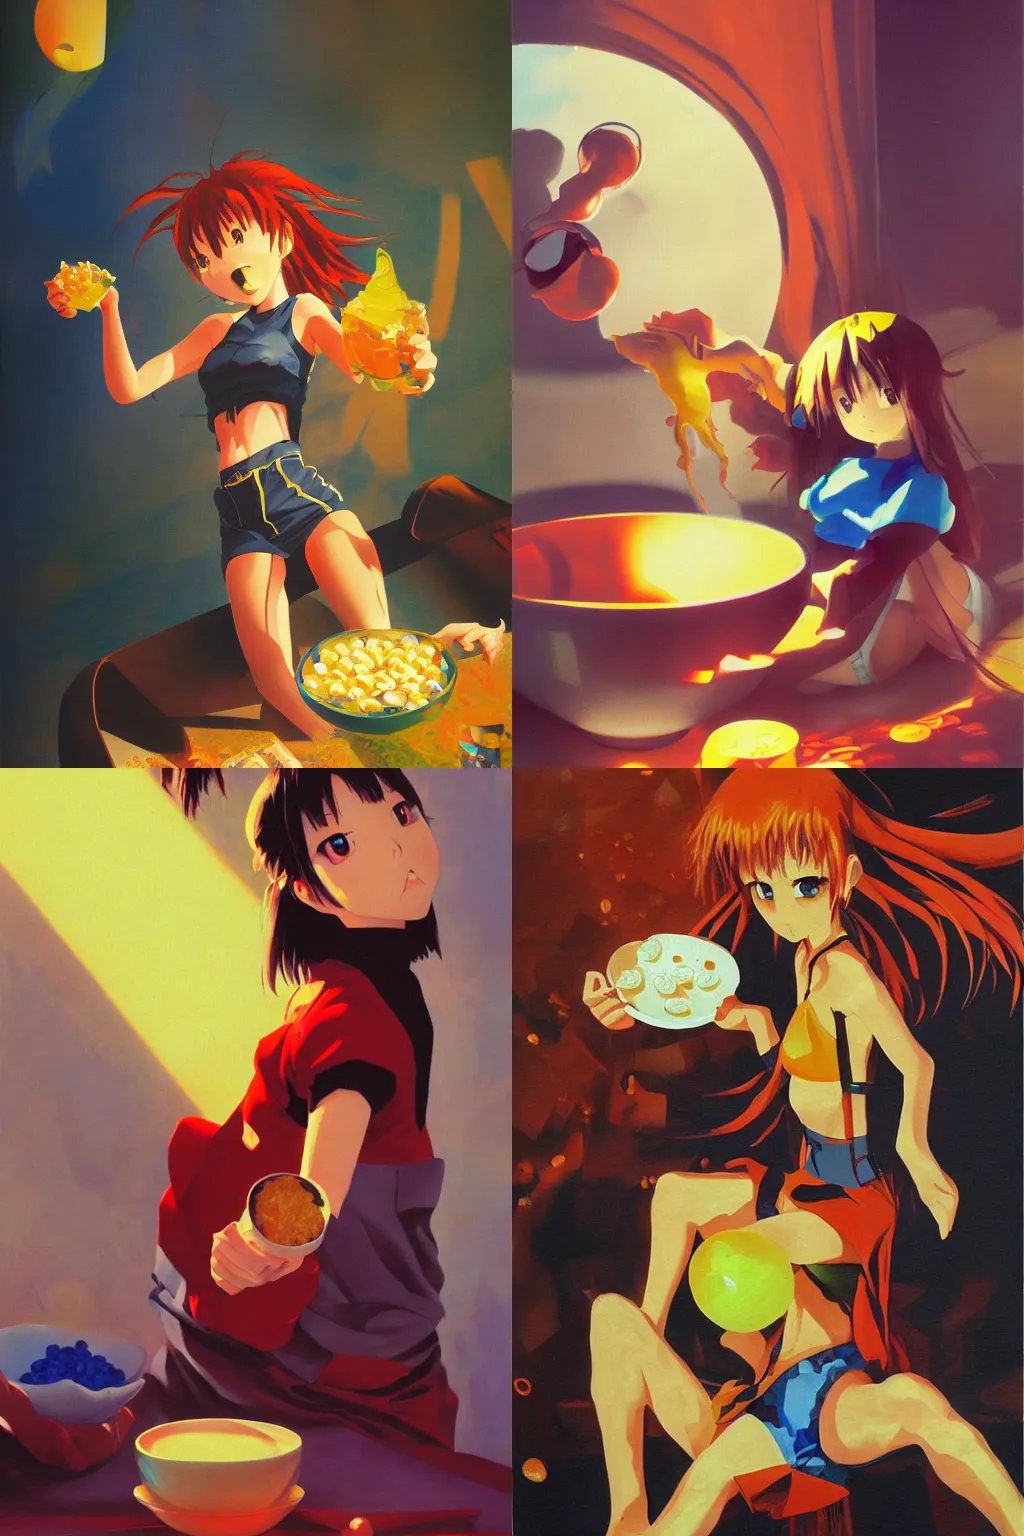 Prompt: oil painting, yoji shinakawa, studio gainax, y2k design, anime girl floating in cereal, dramatic lighting